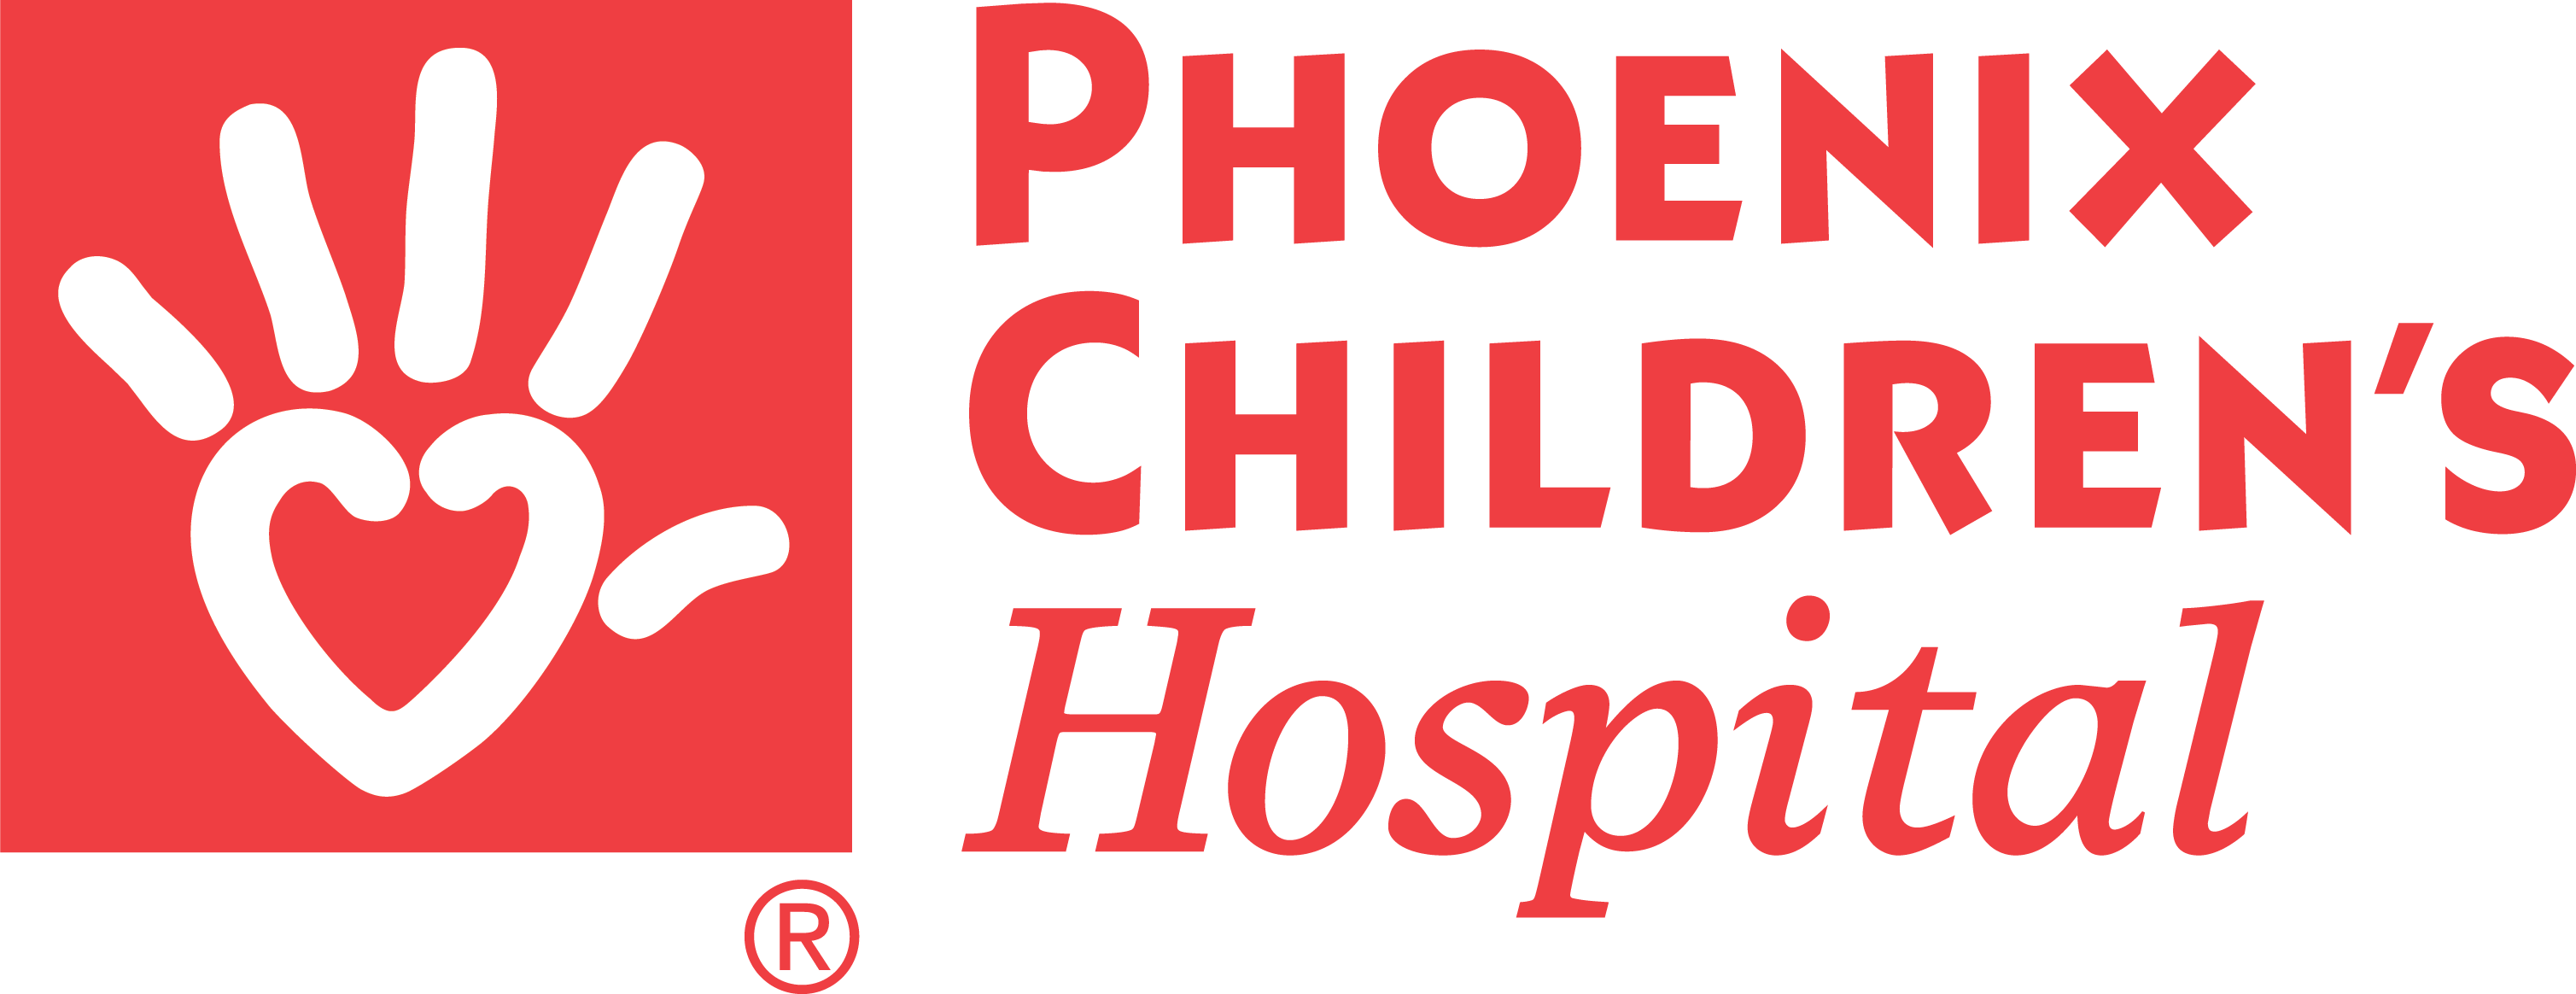 pc-phoenix-childrens-hosp-logo